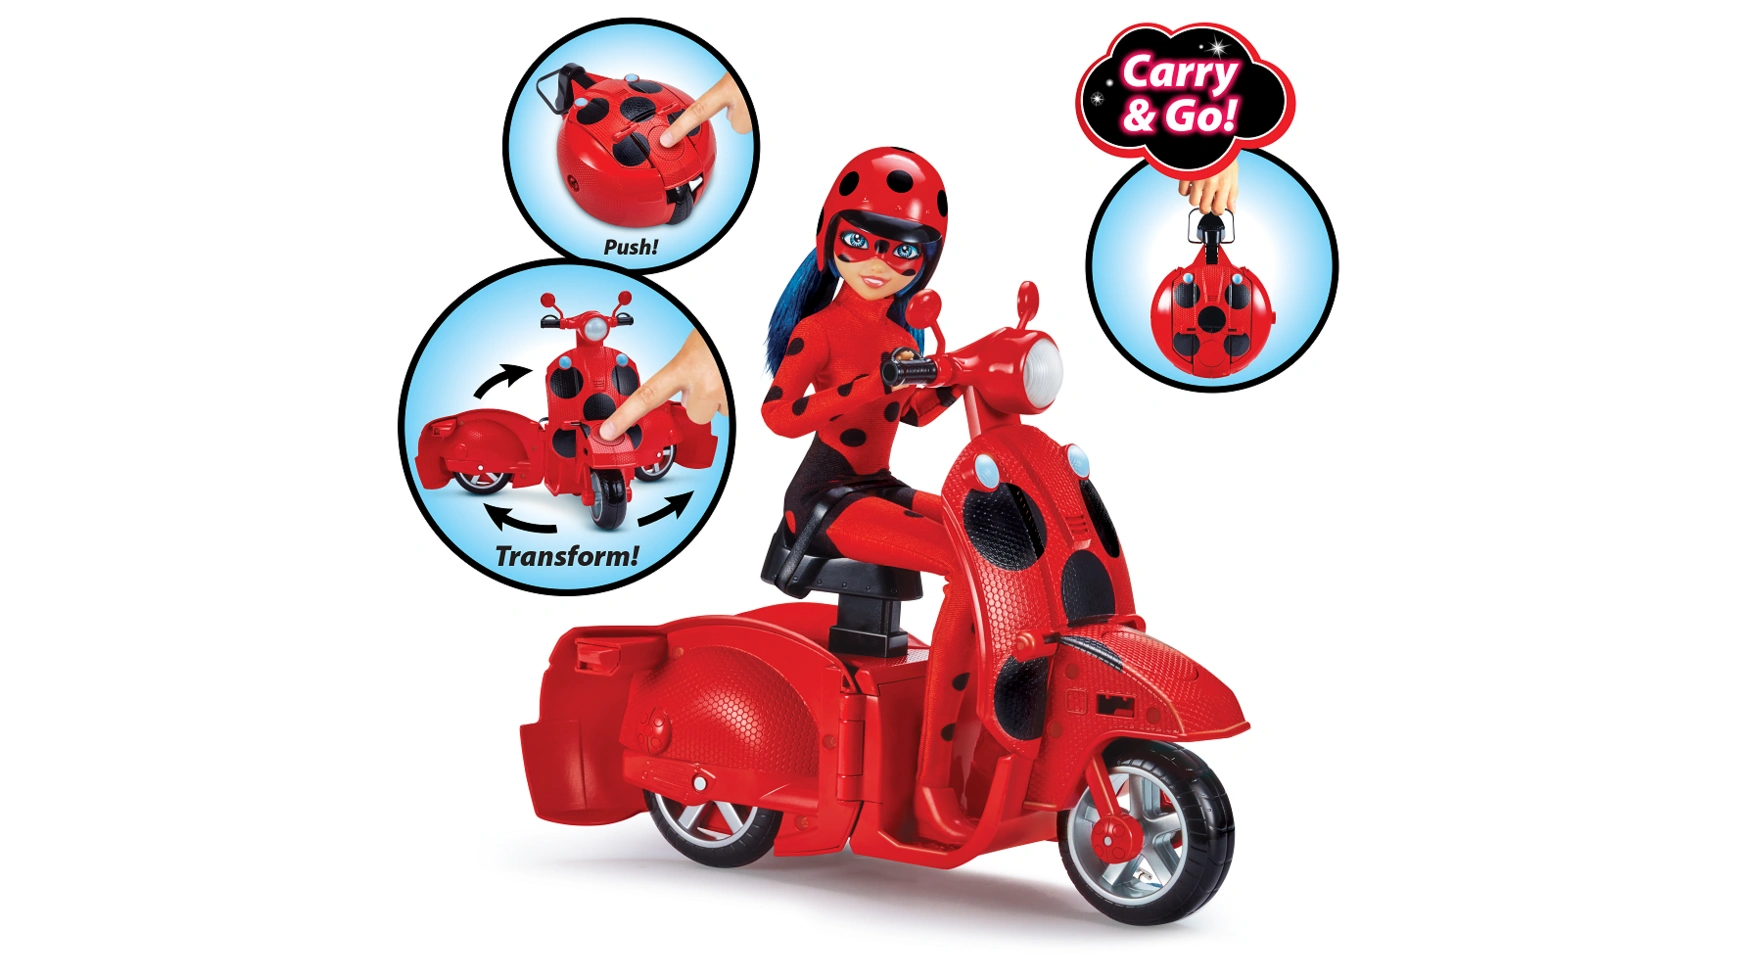 Bandai Чудесная кукла Божья коровка Lucky Charm со скутером Switch 'n go термометр для улицы божья коровка 16 5см